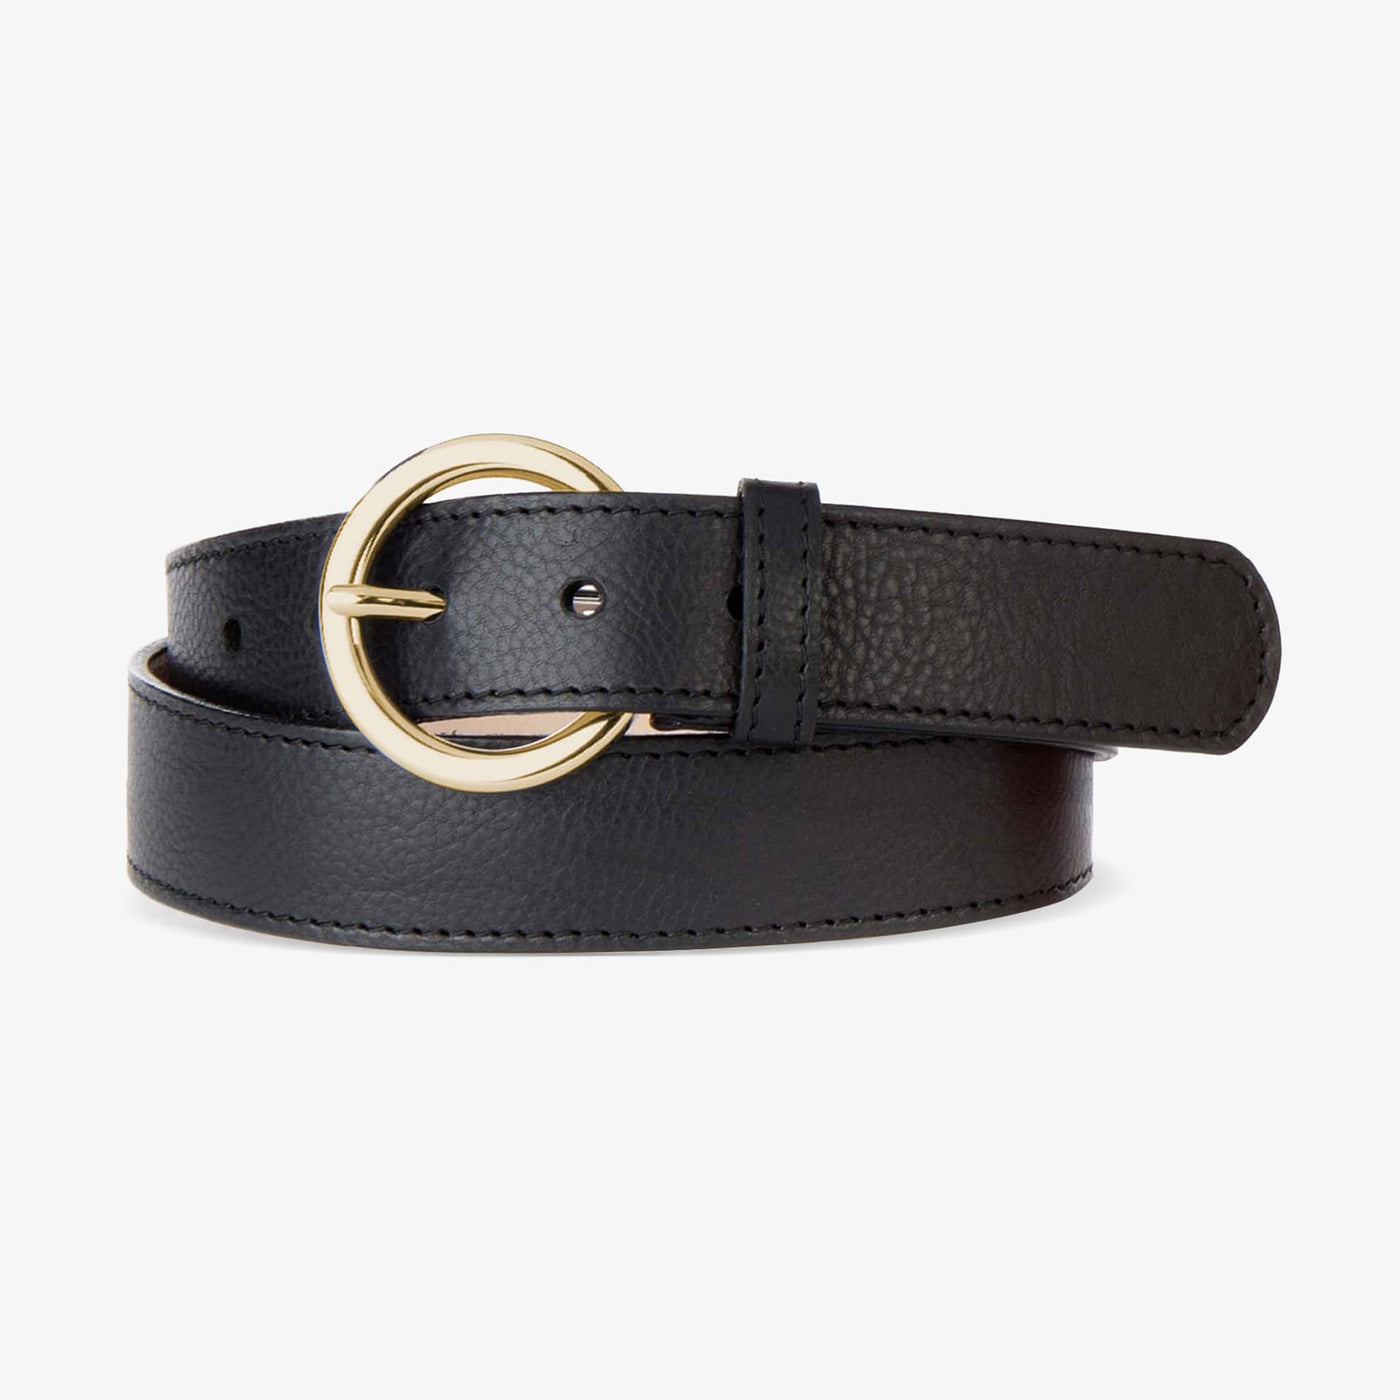 Zaltana Vachetta BRAVE Leather Belt -- Custom Made for You